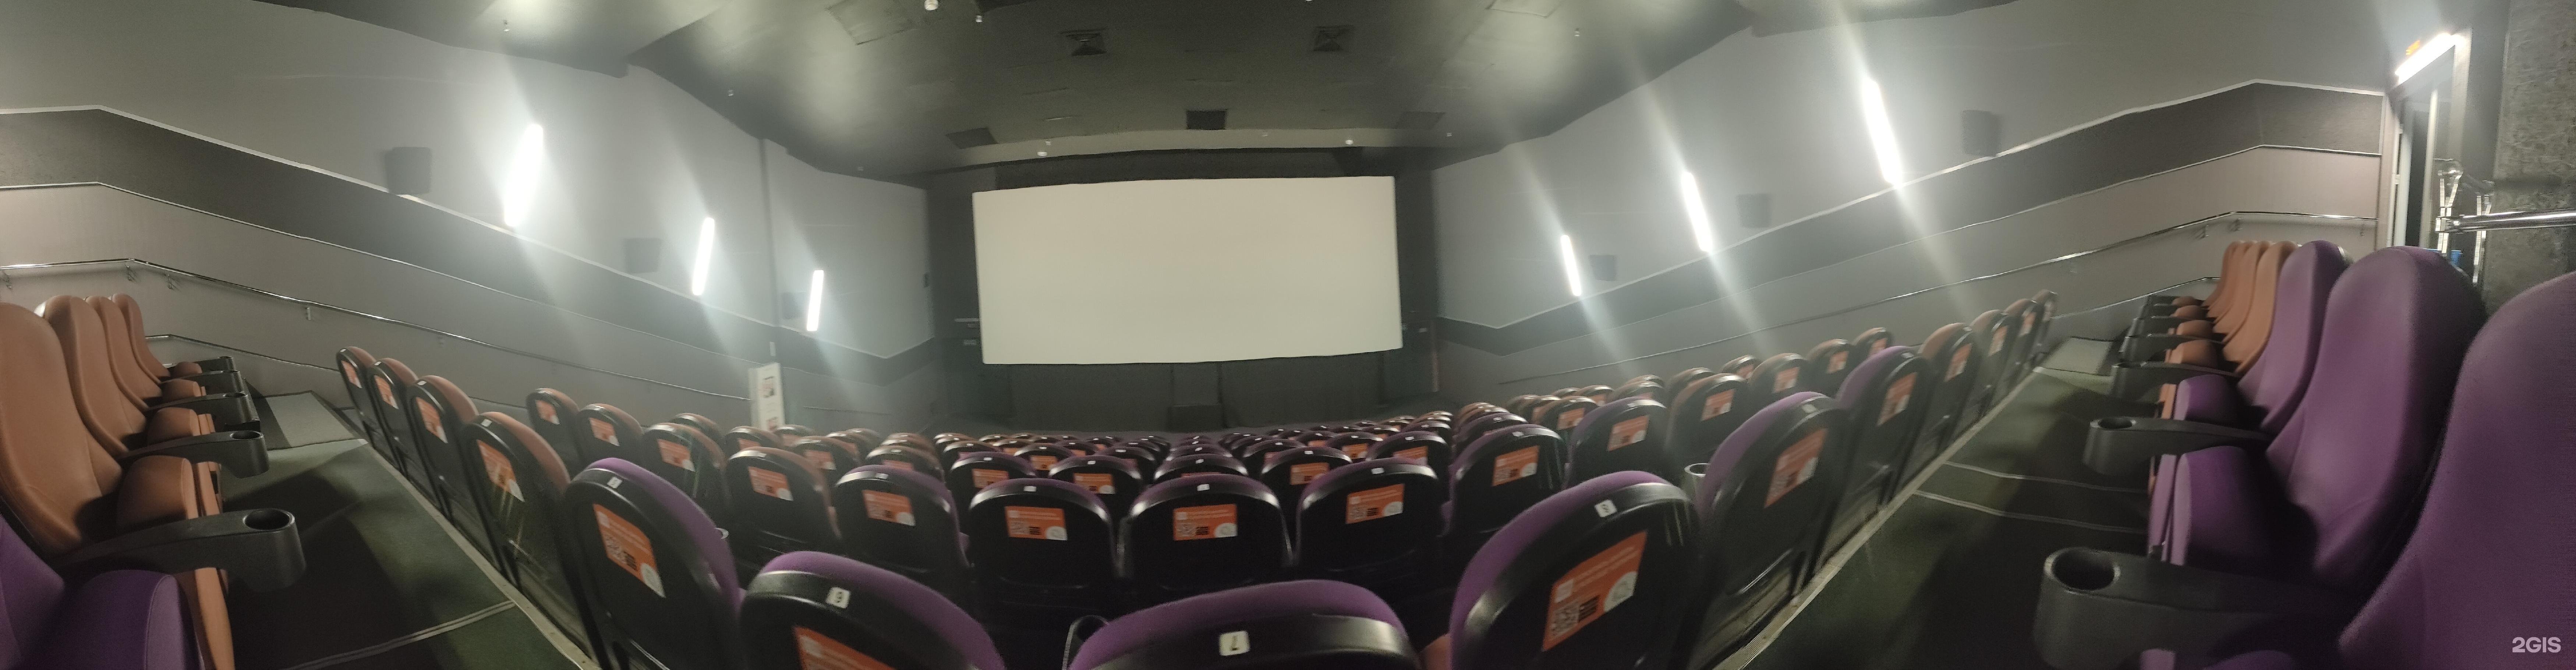 Кинотеатр оскар хабаровск